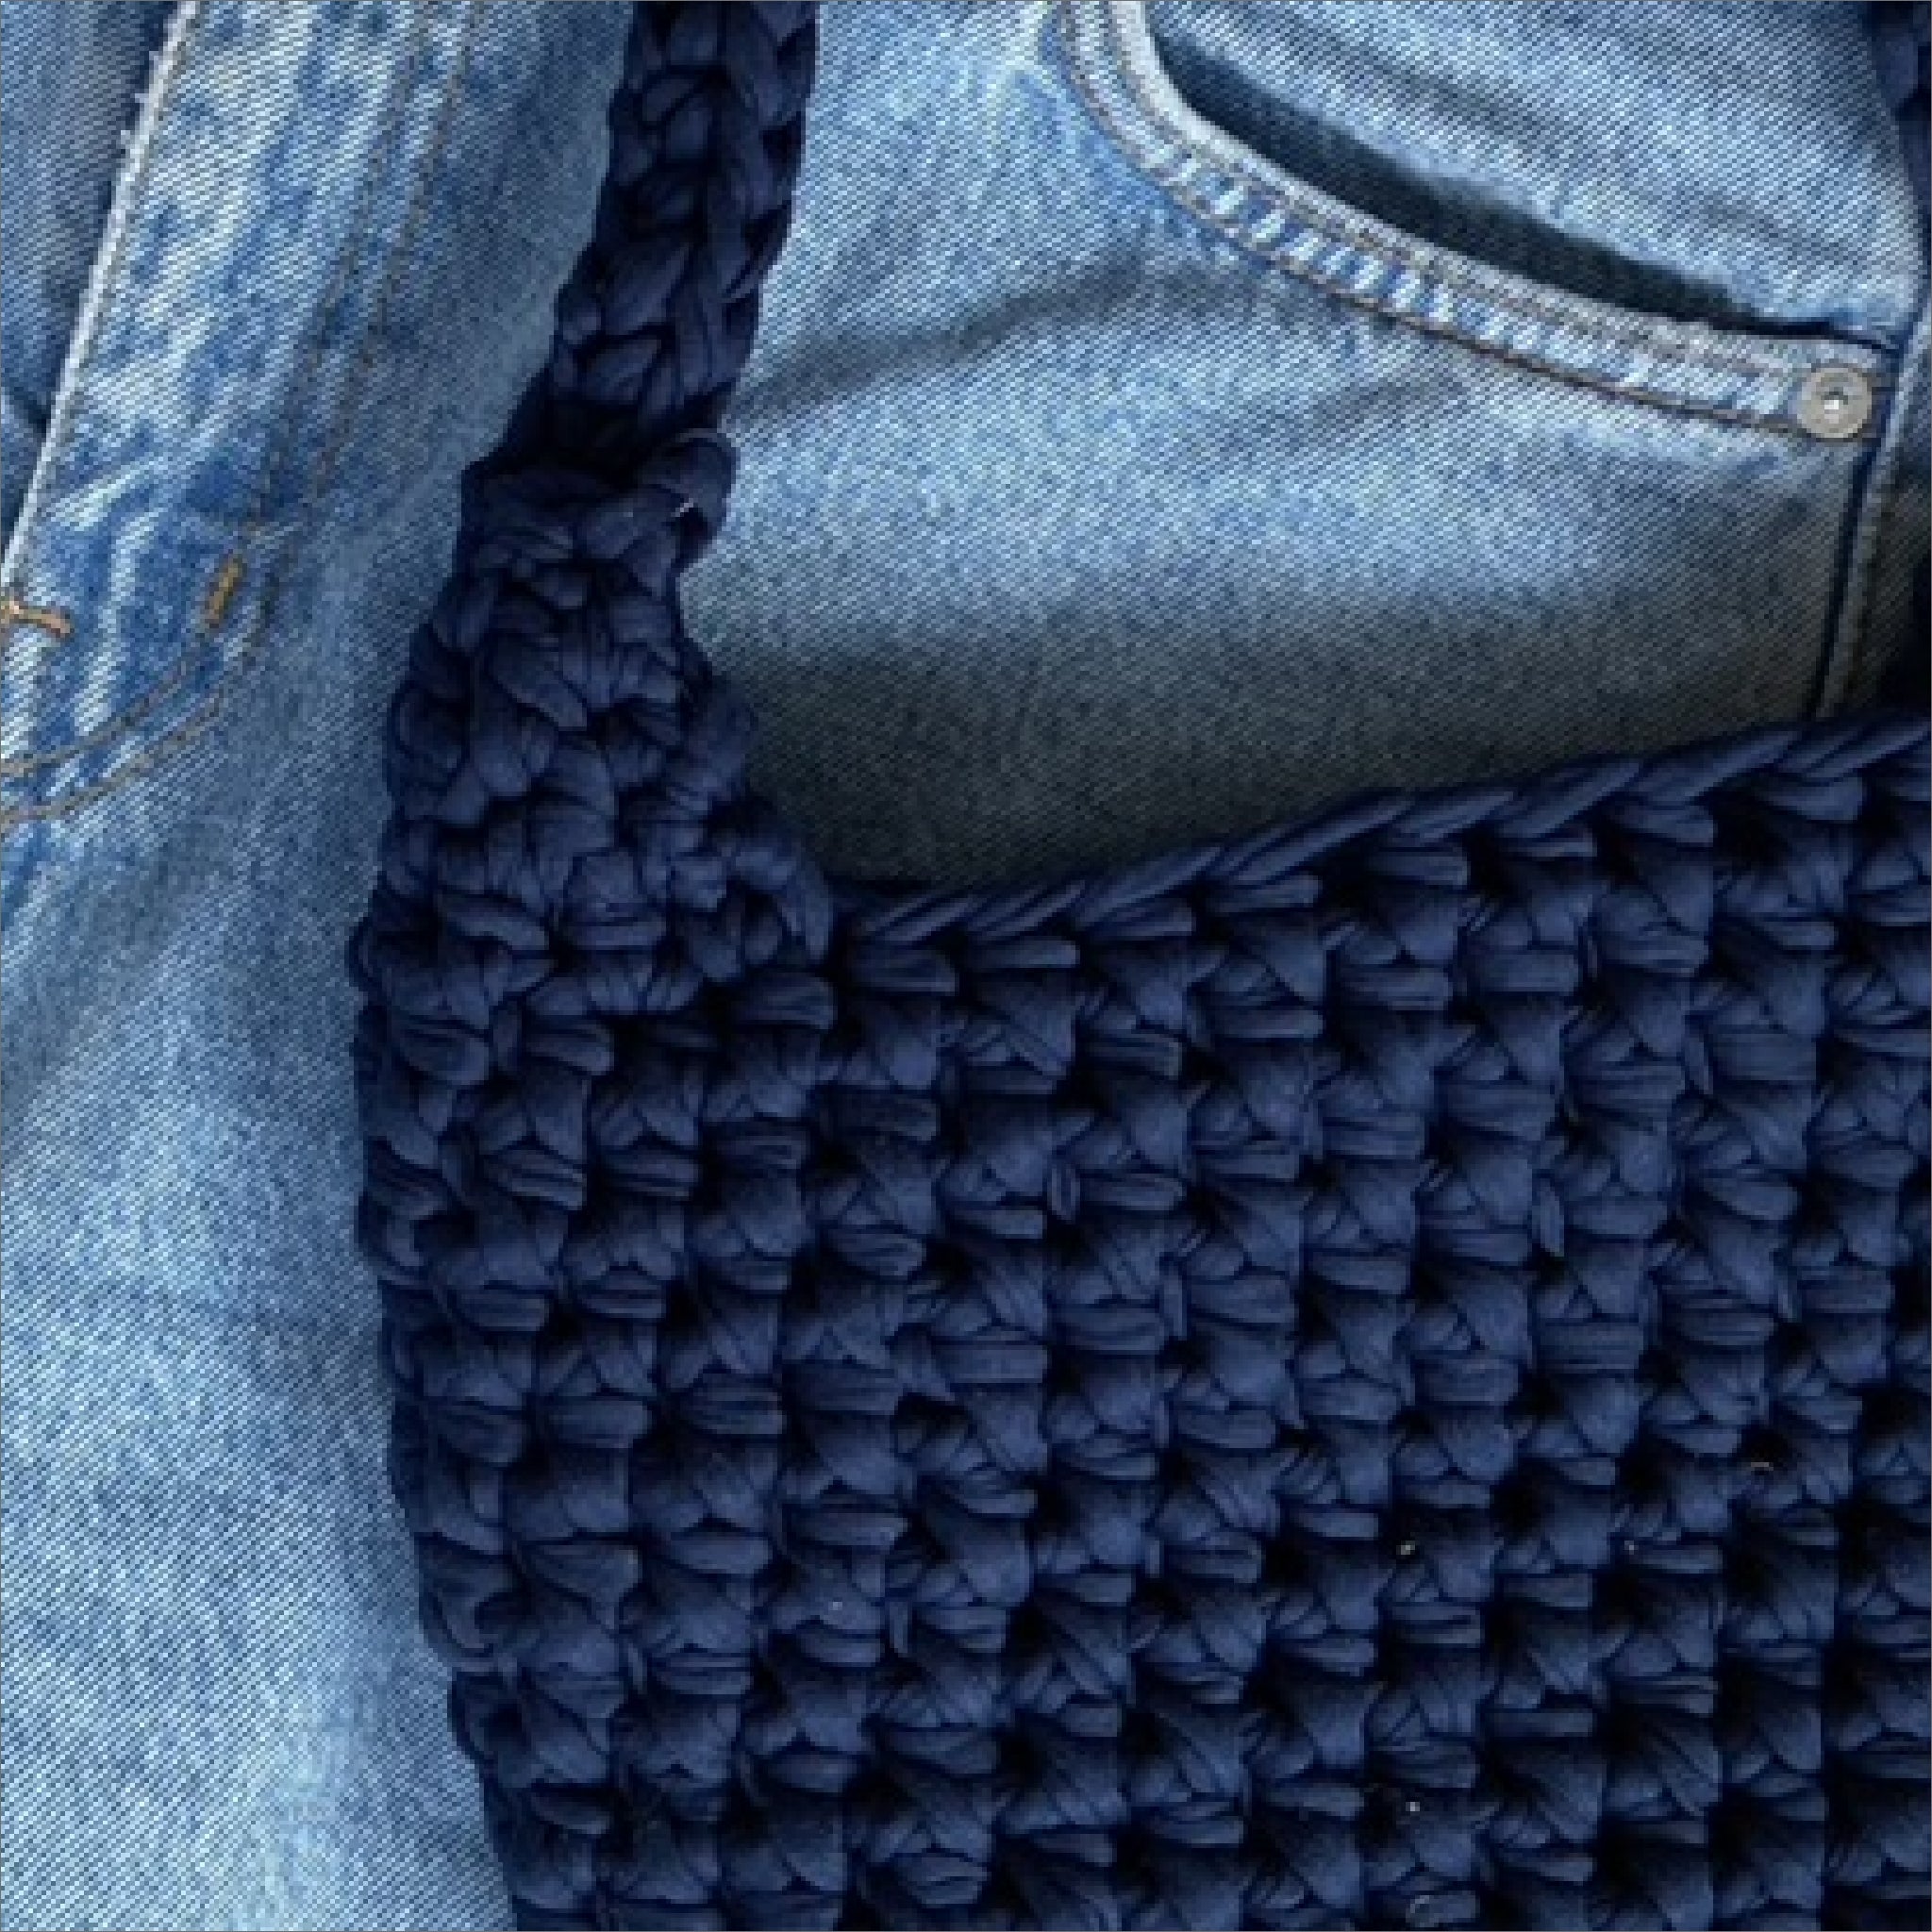 Crochet Rectangular Purse with Built-in Handle – MynLove